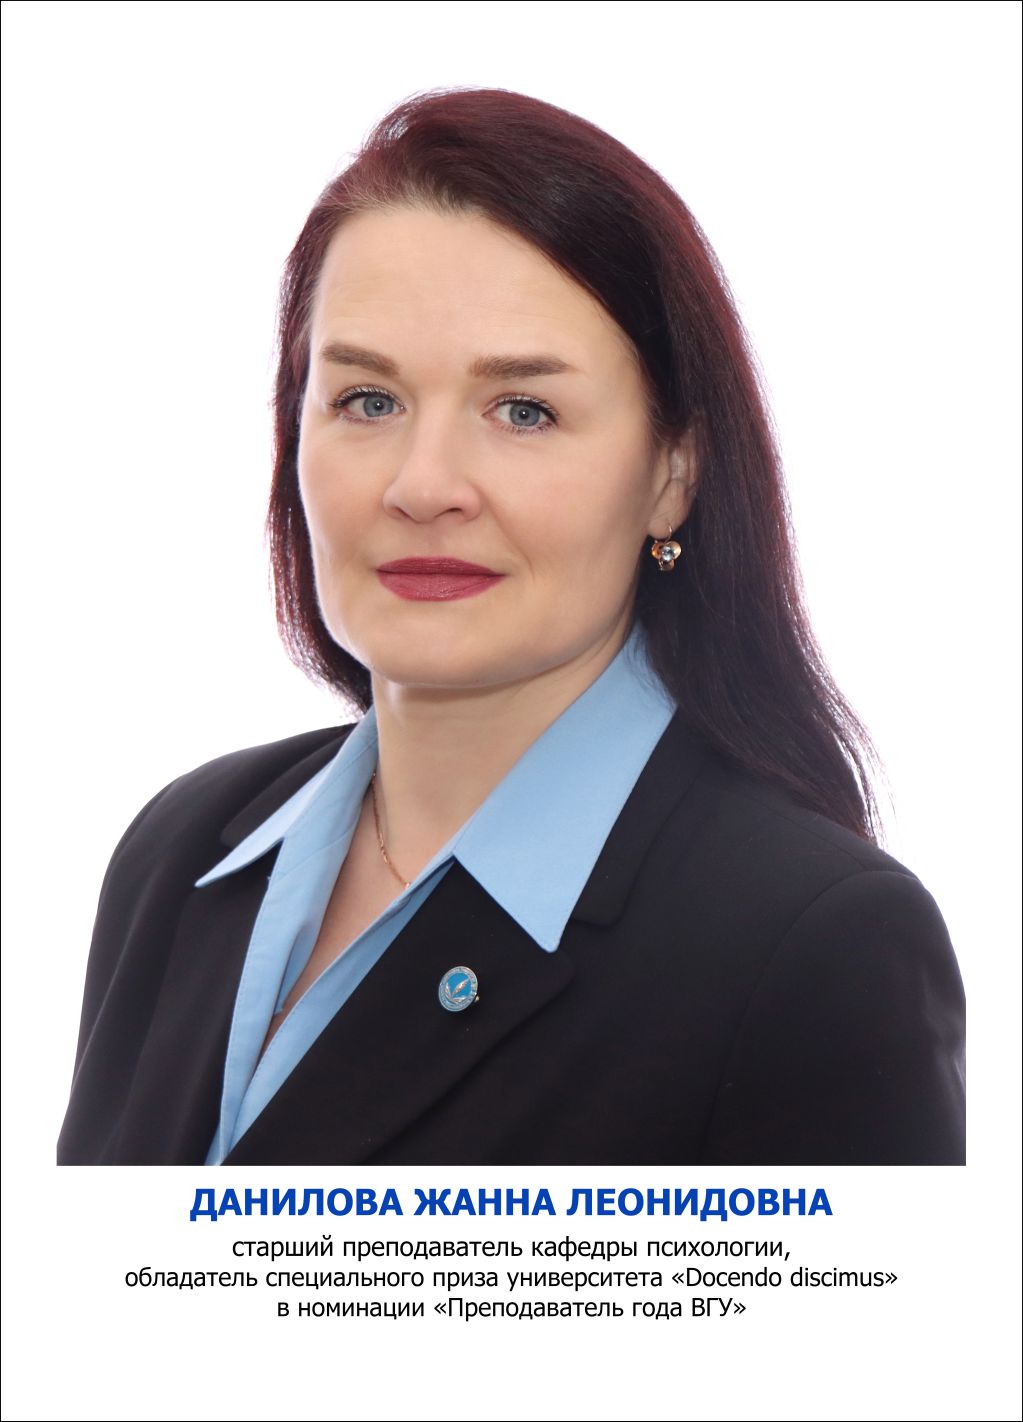 Данилова Жанна Леонидовна